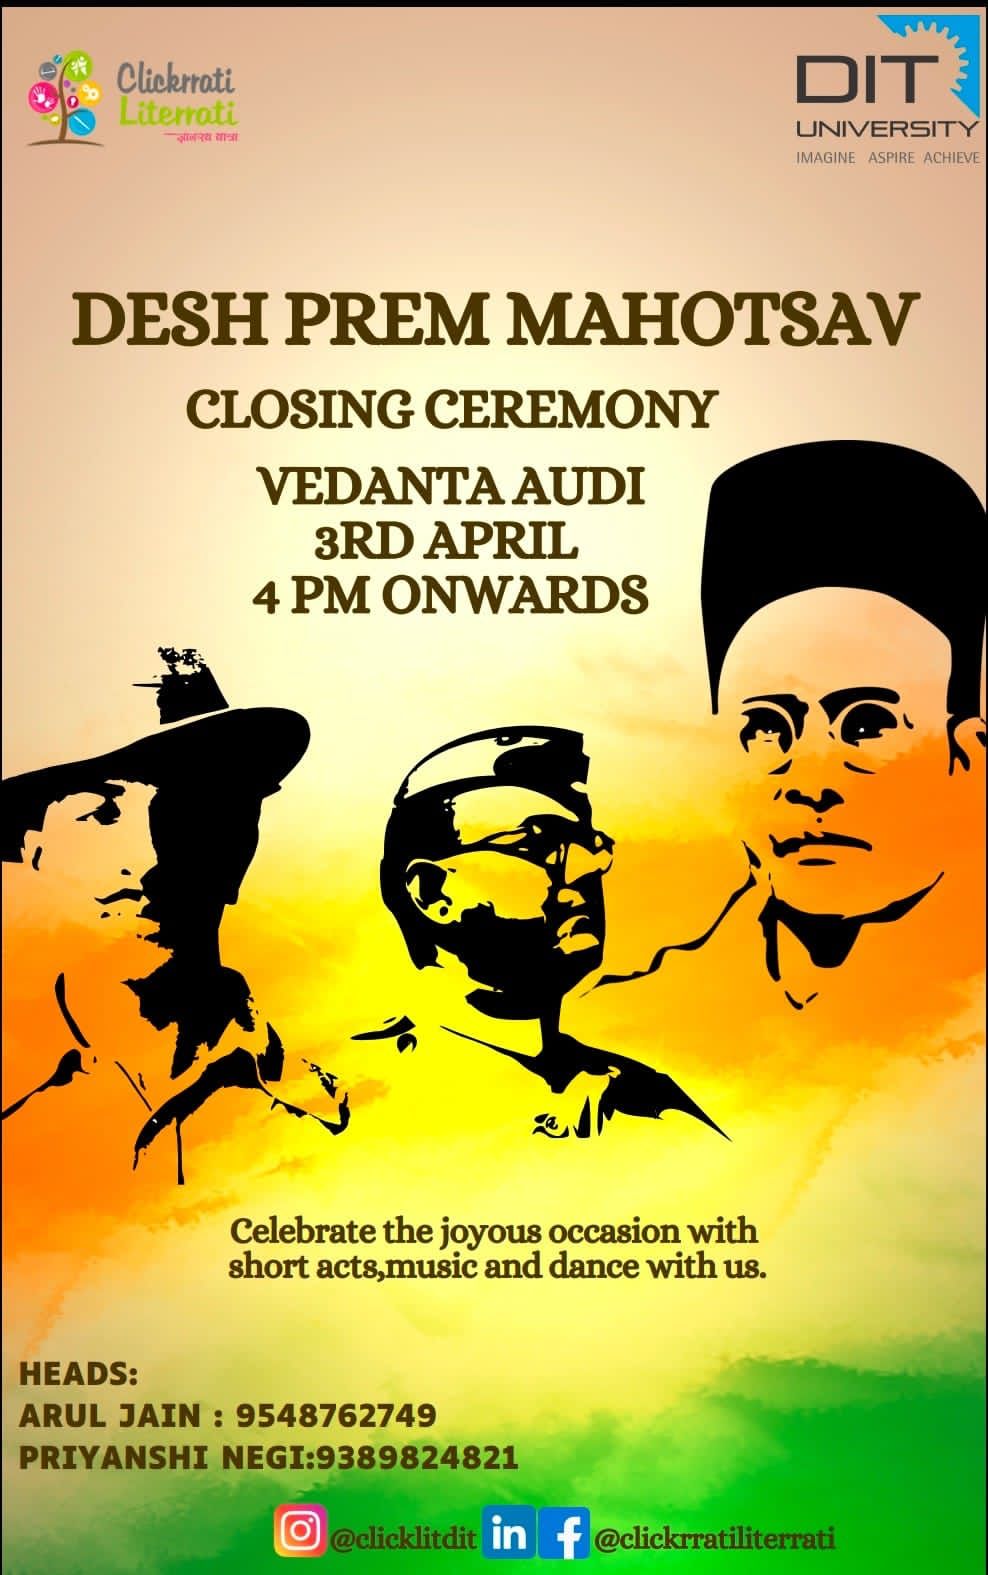 Closing ceremony of Desh Prem Mahotsav